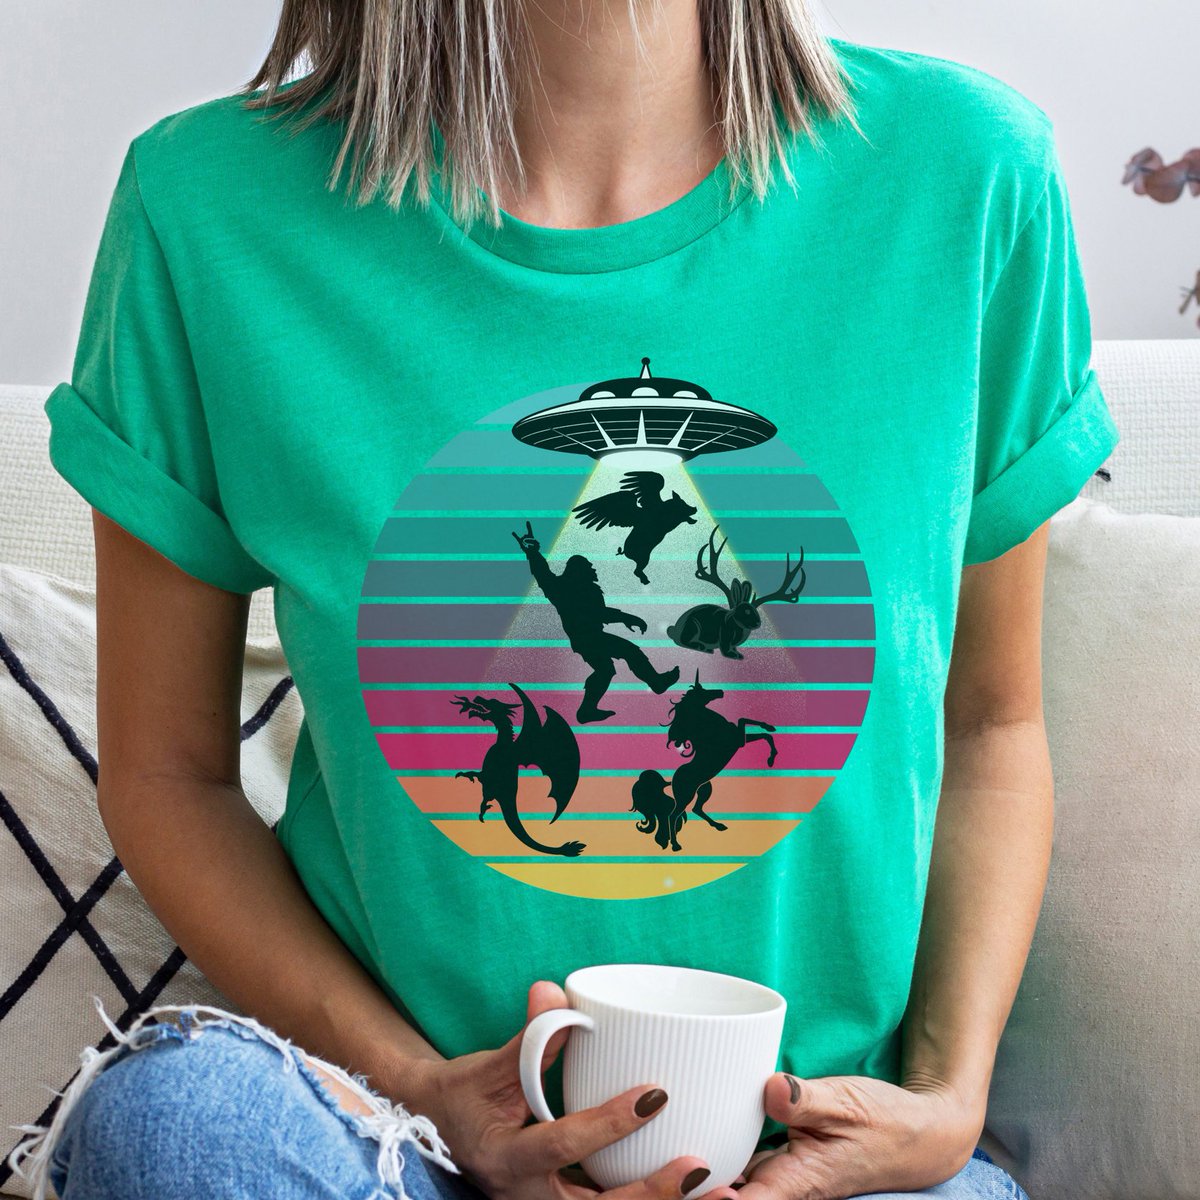 #Cryptids T Shirt & Crewneck, Bigfoot, Unicorn Tshirt, Dragon Shirt, Alien UFO Shirt, Sasquatch and Mythological Creatures Sweatshirts, Tees #fantasyscifi etsy.me/3lueqMa
#bigfoot #jackalope #ufo #aliens #funnytshirts